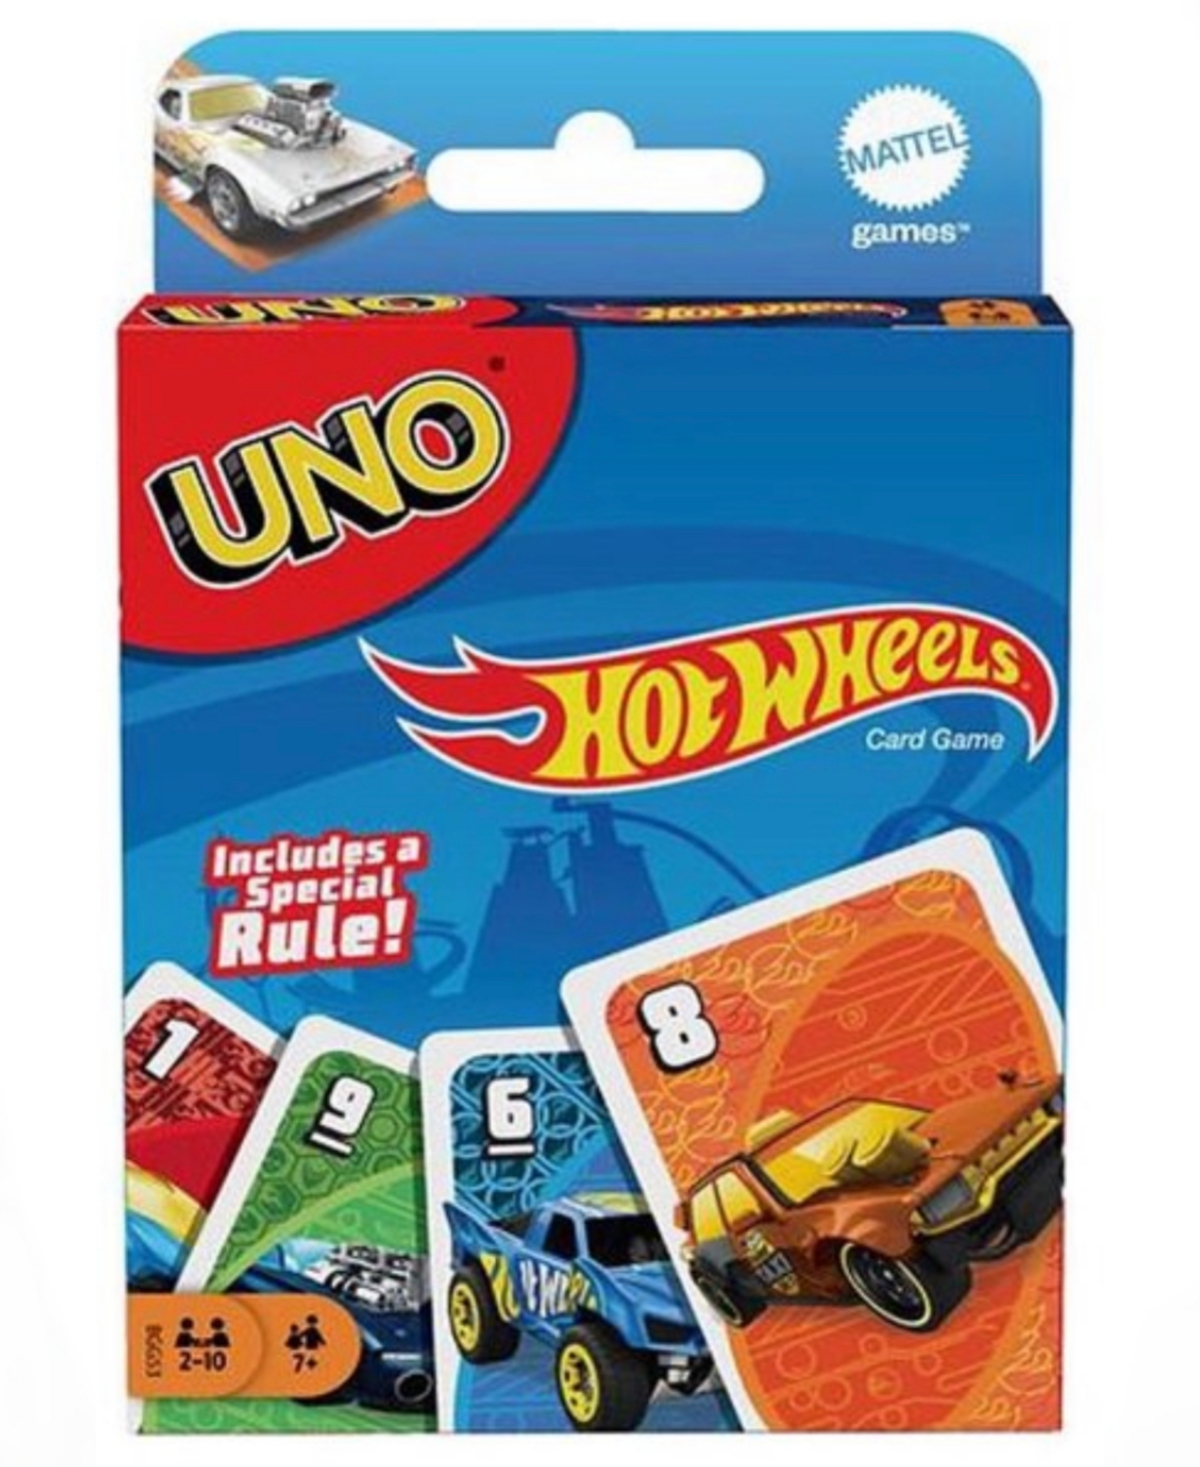 Mattel Uno Hot Wheels Cars Card Game In Multi Colored